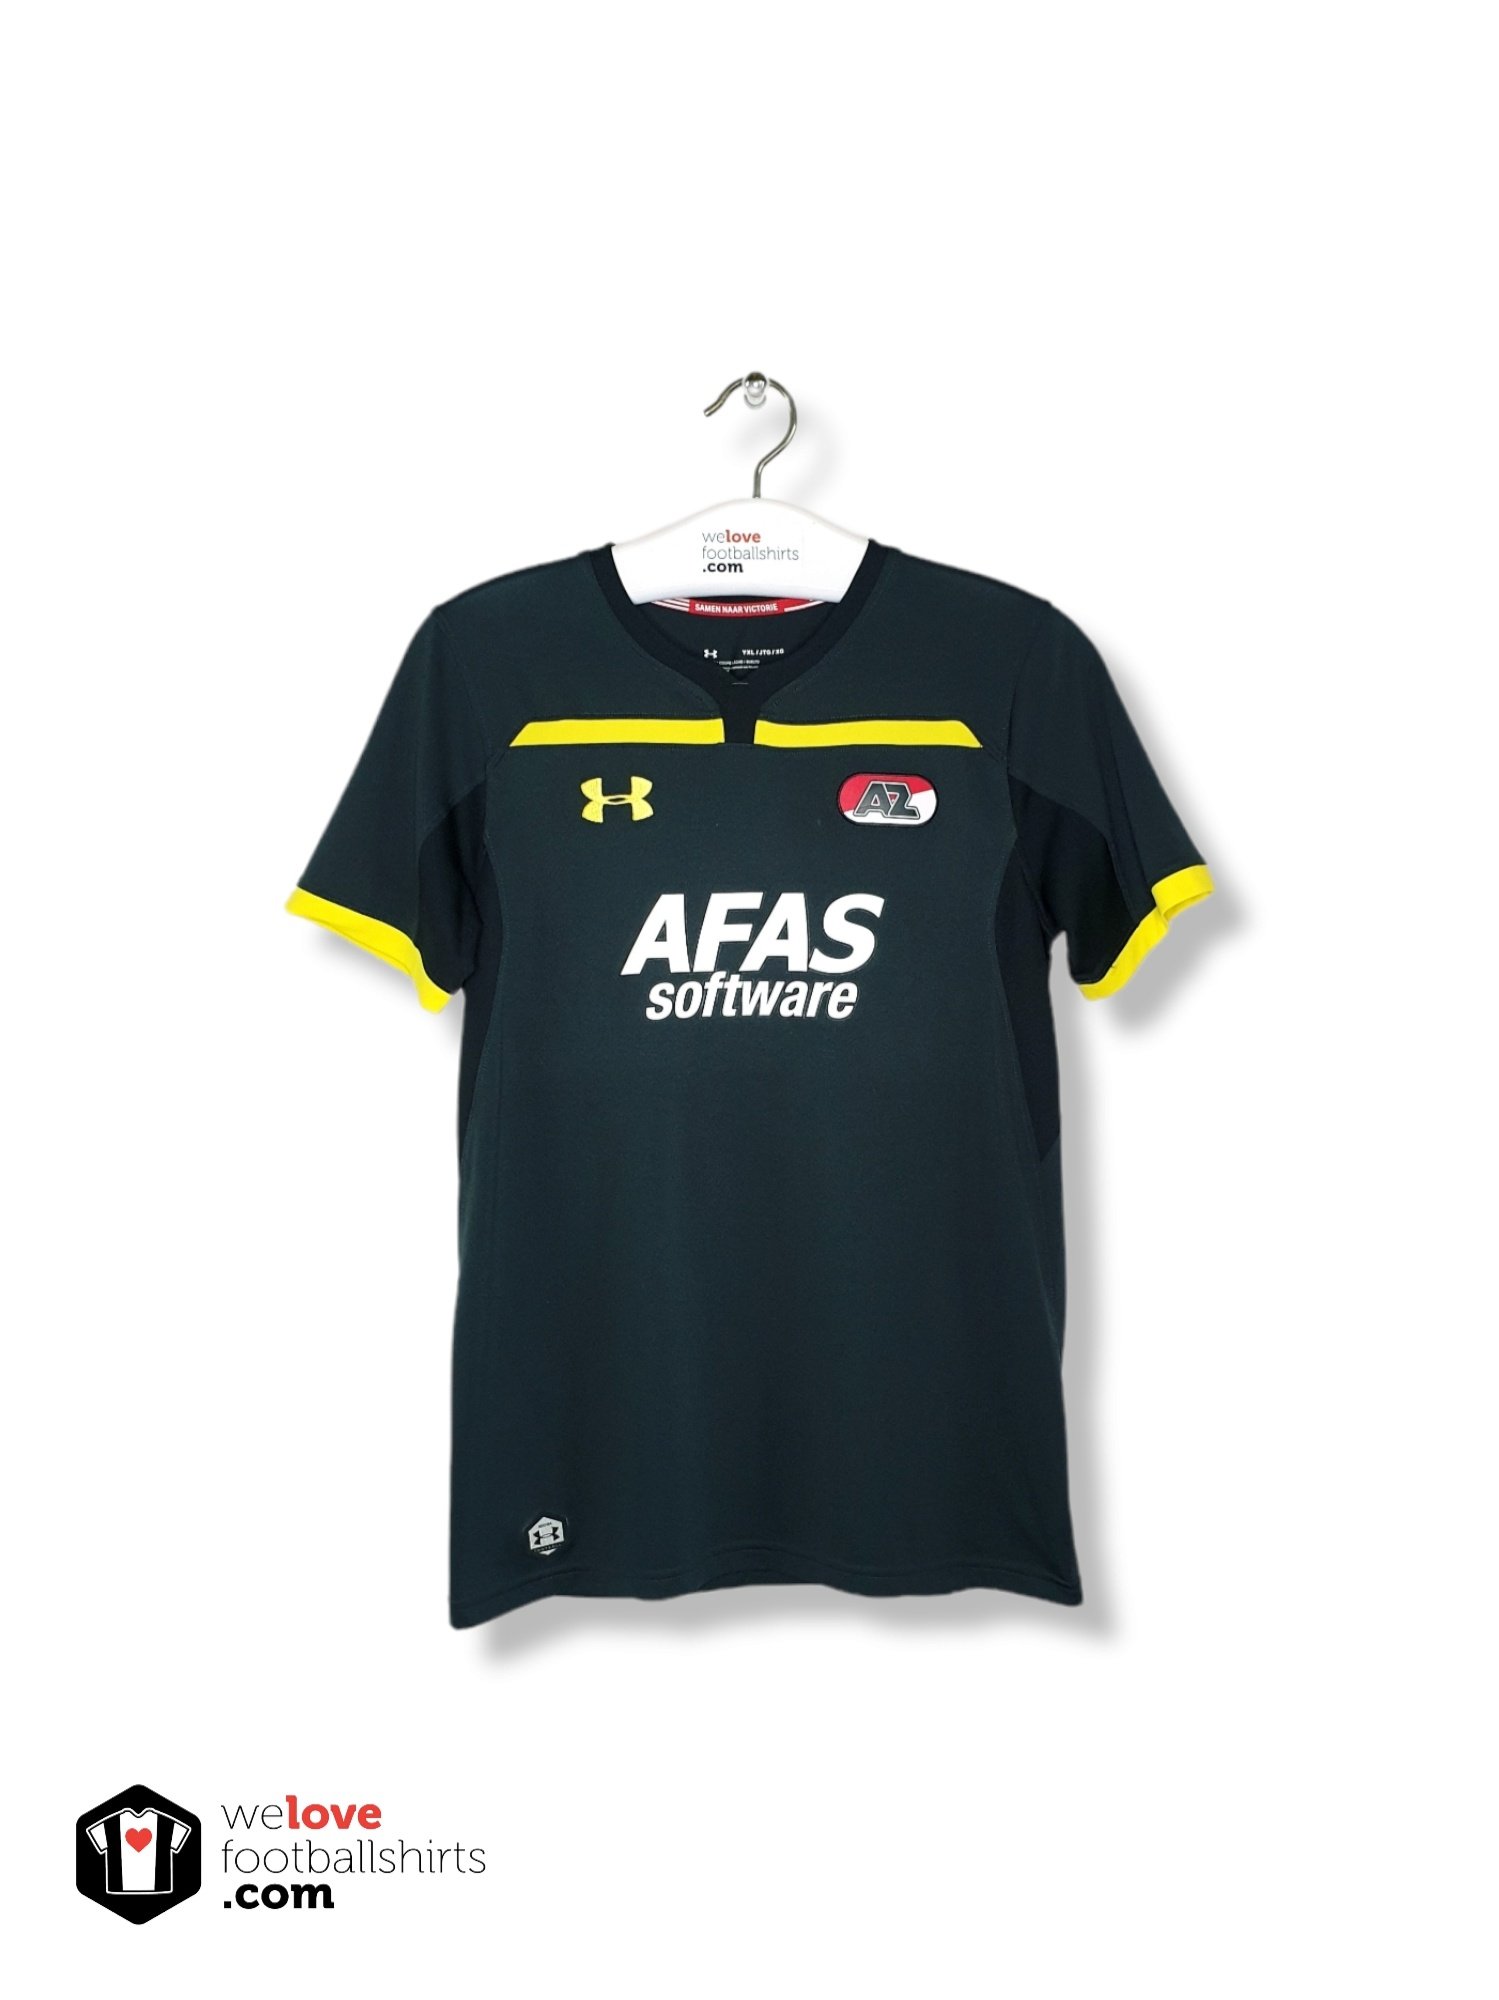 Kalmte slaaf het formulier Under Armour Football Shirt AZ Alkmaar 2017/18